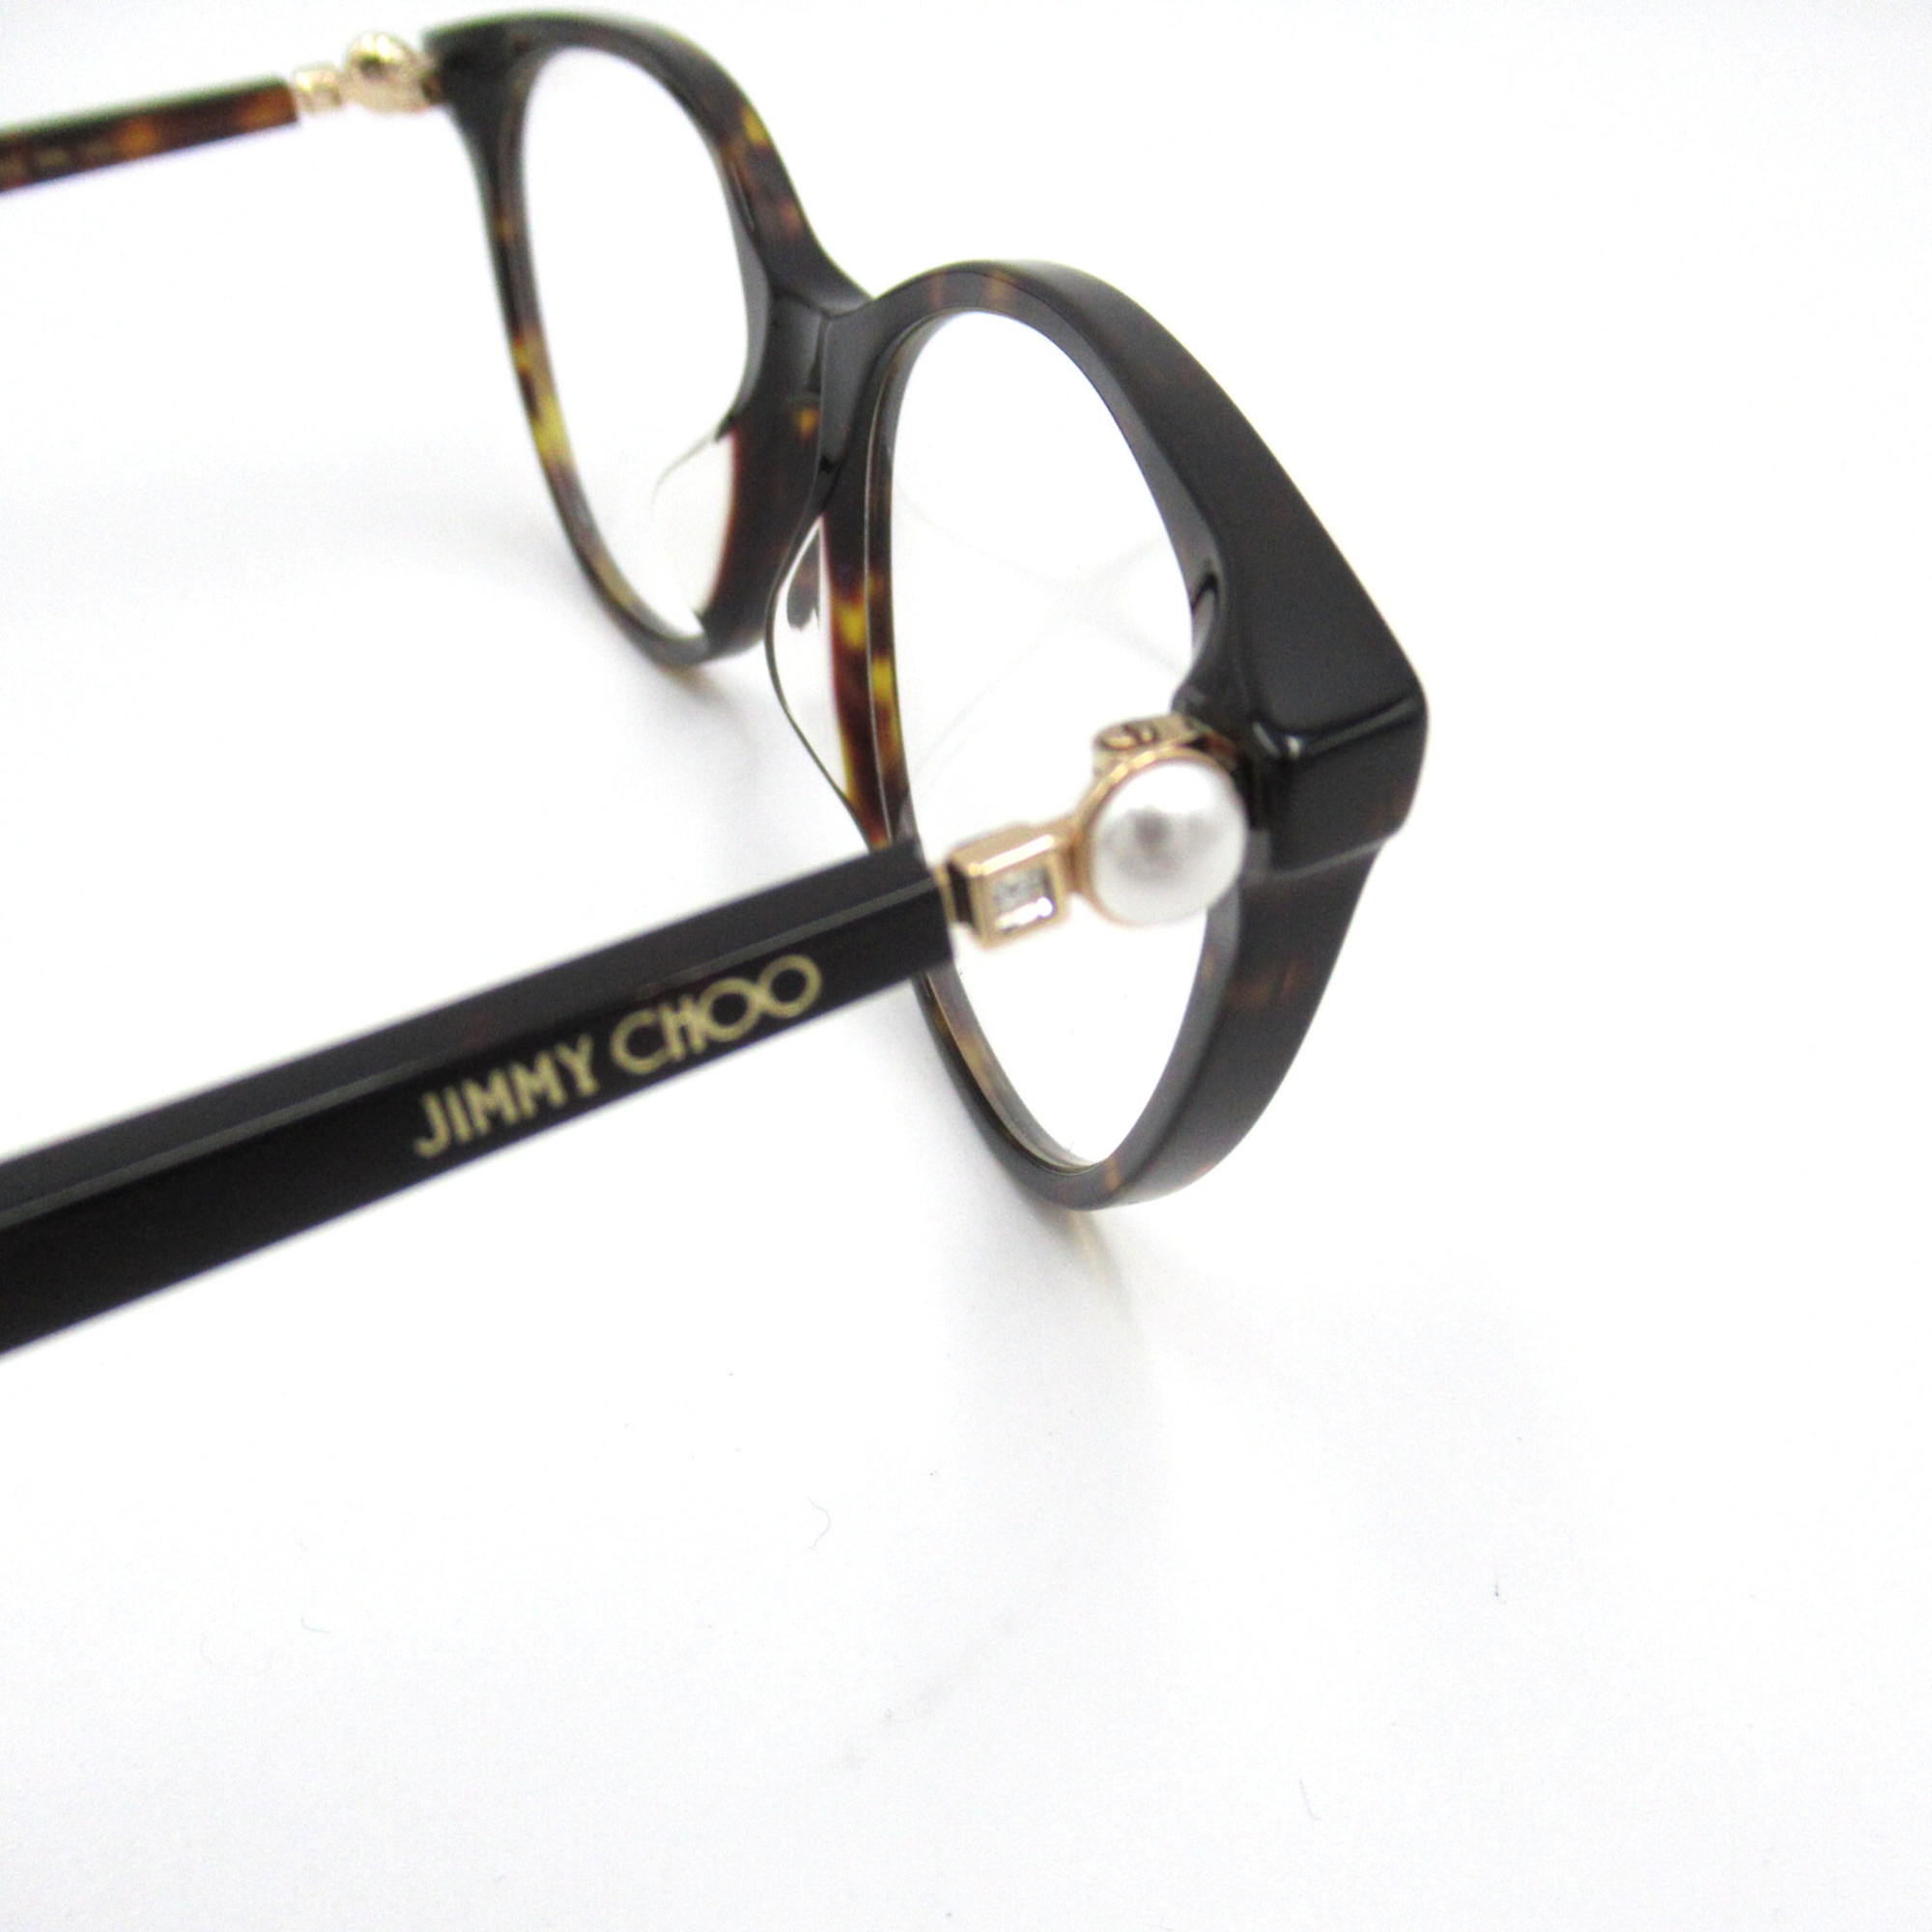 JIMMY CHOO Date Glasses Glasses Frame Brown Plastic 378/G 086(53)